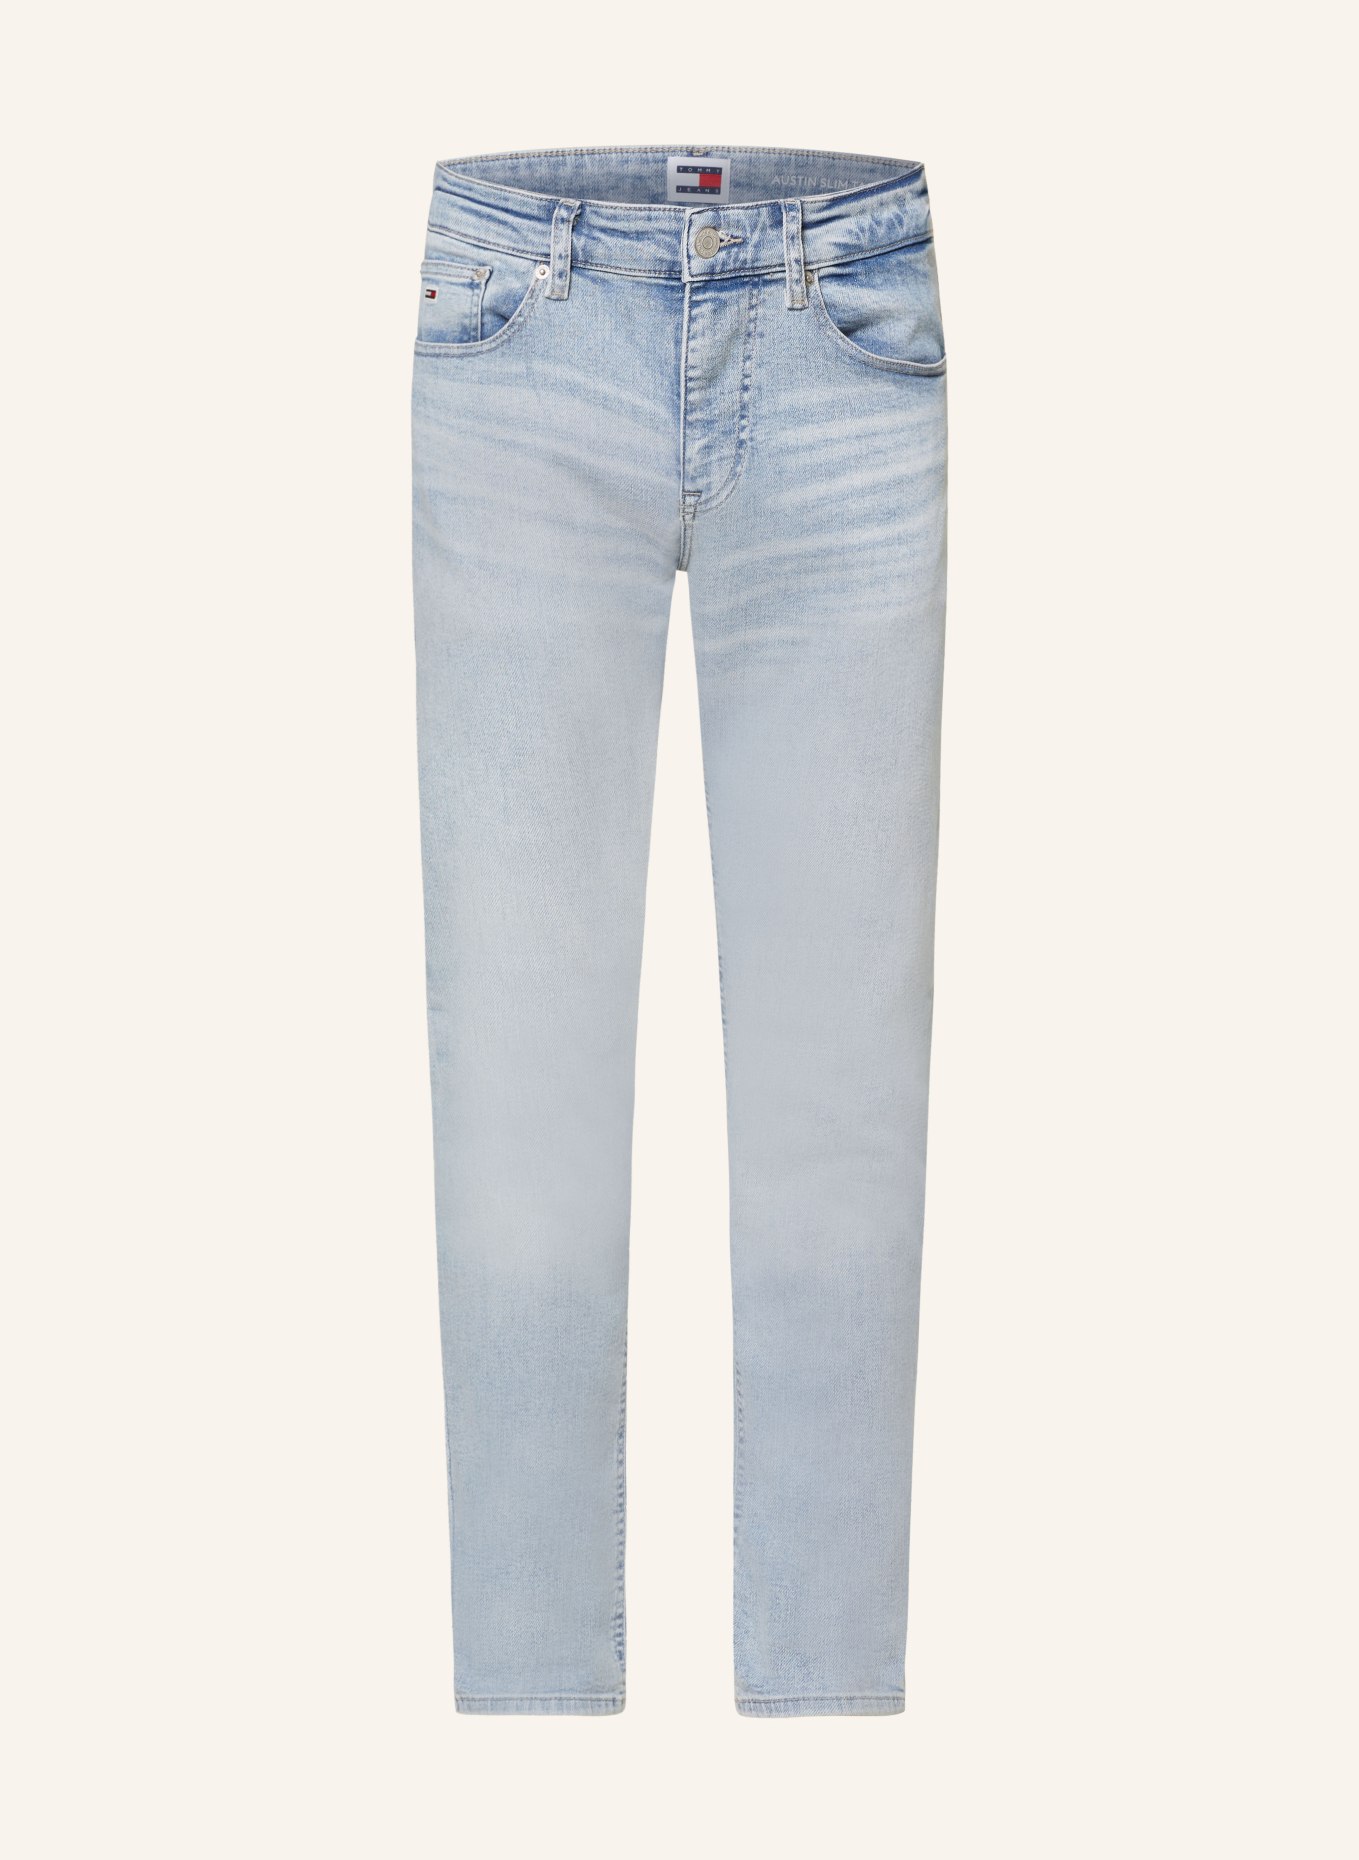 TOMMY JEANS Jeans AUSTIN Slim Tapered Fit, Farbe: 1AB Denim Light (Bild 1)